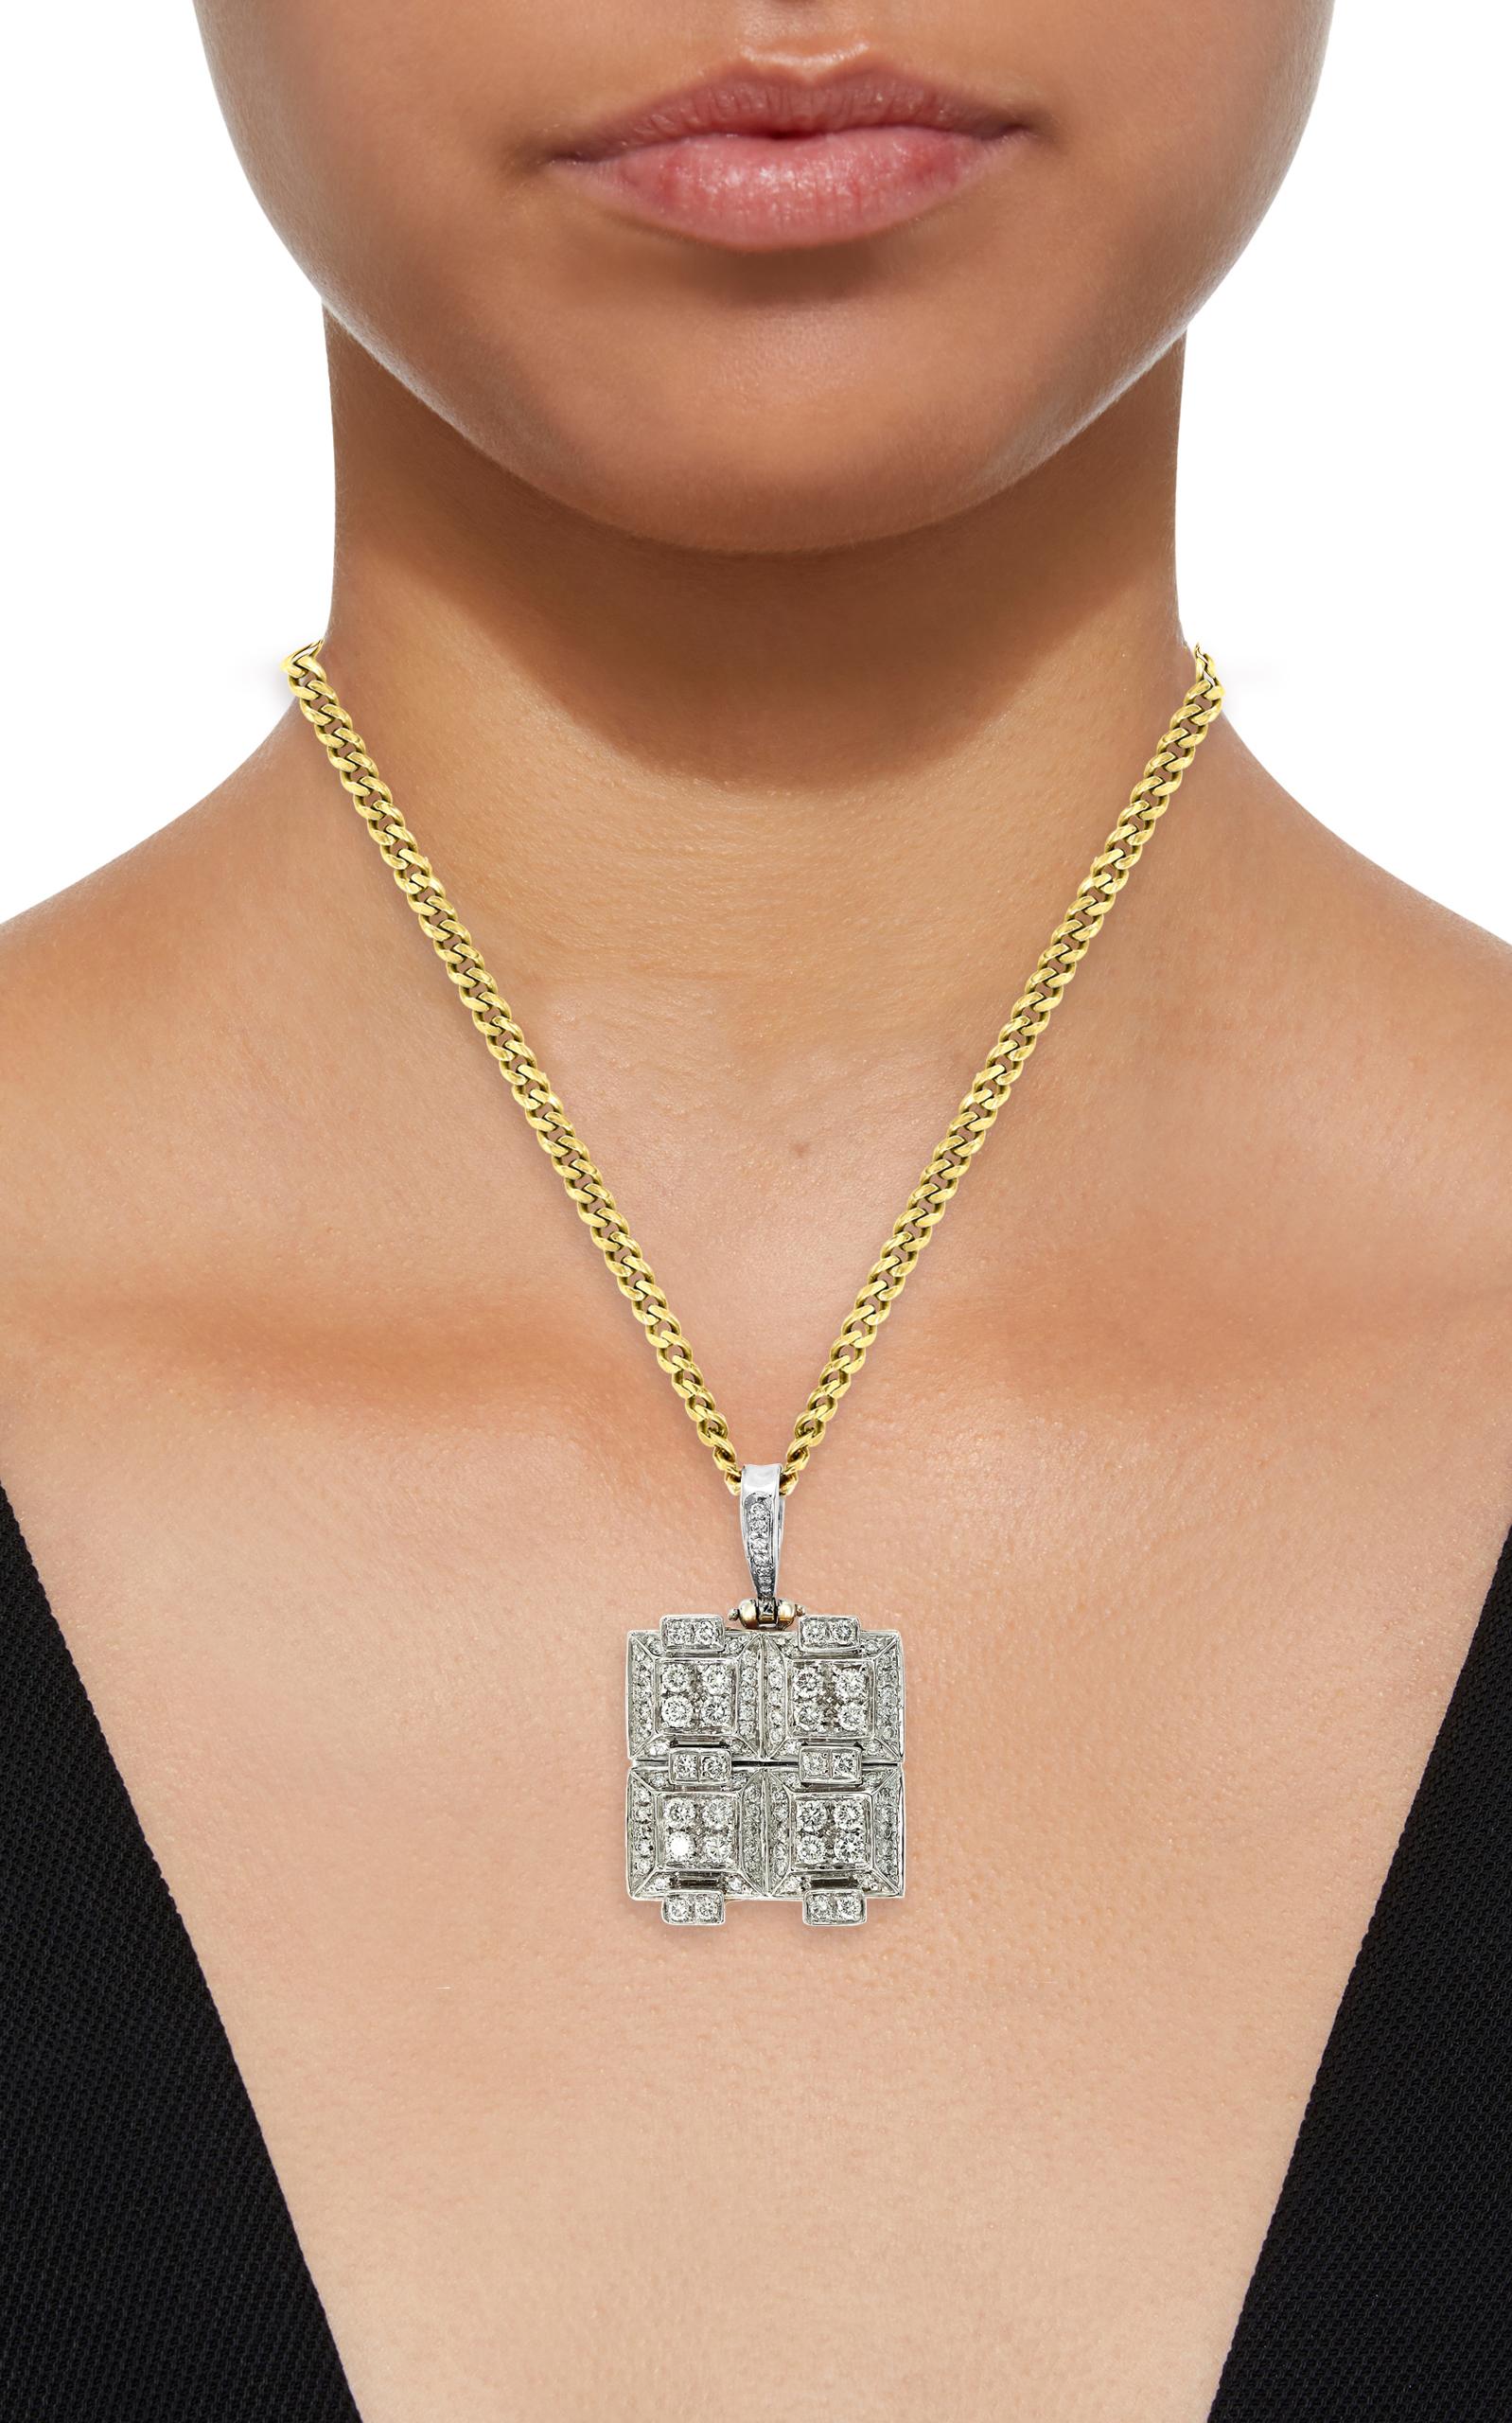 Women's 2.5 Carat Diamond Pendant/ Necklace 18 Karat Yellow Gold with Chain